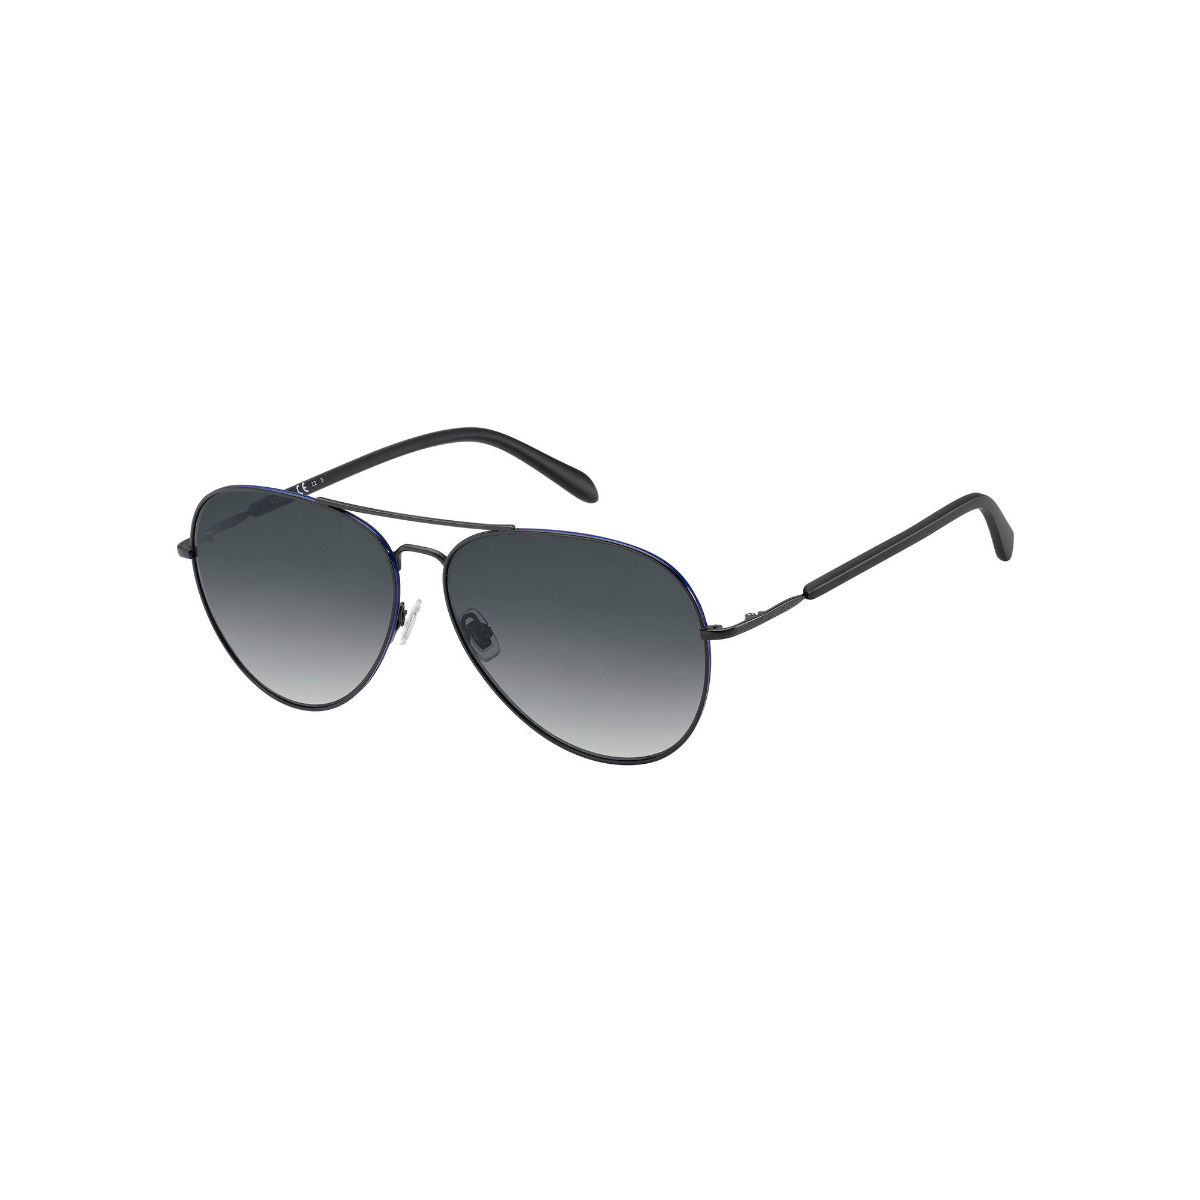 NWT $380 Saint Laurent Paris YSL SL328 Matte Black Aviator Sunglasses  AUTHENTIC | eBay